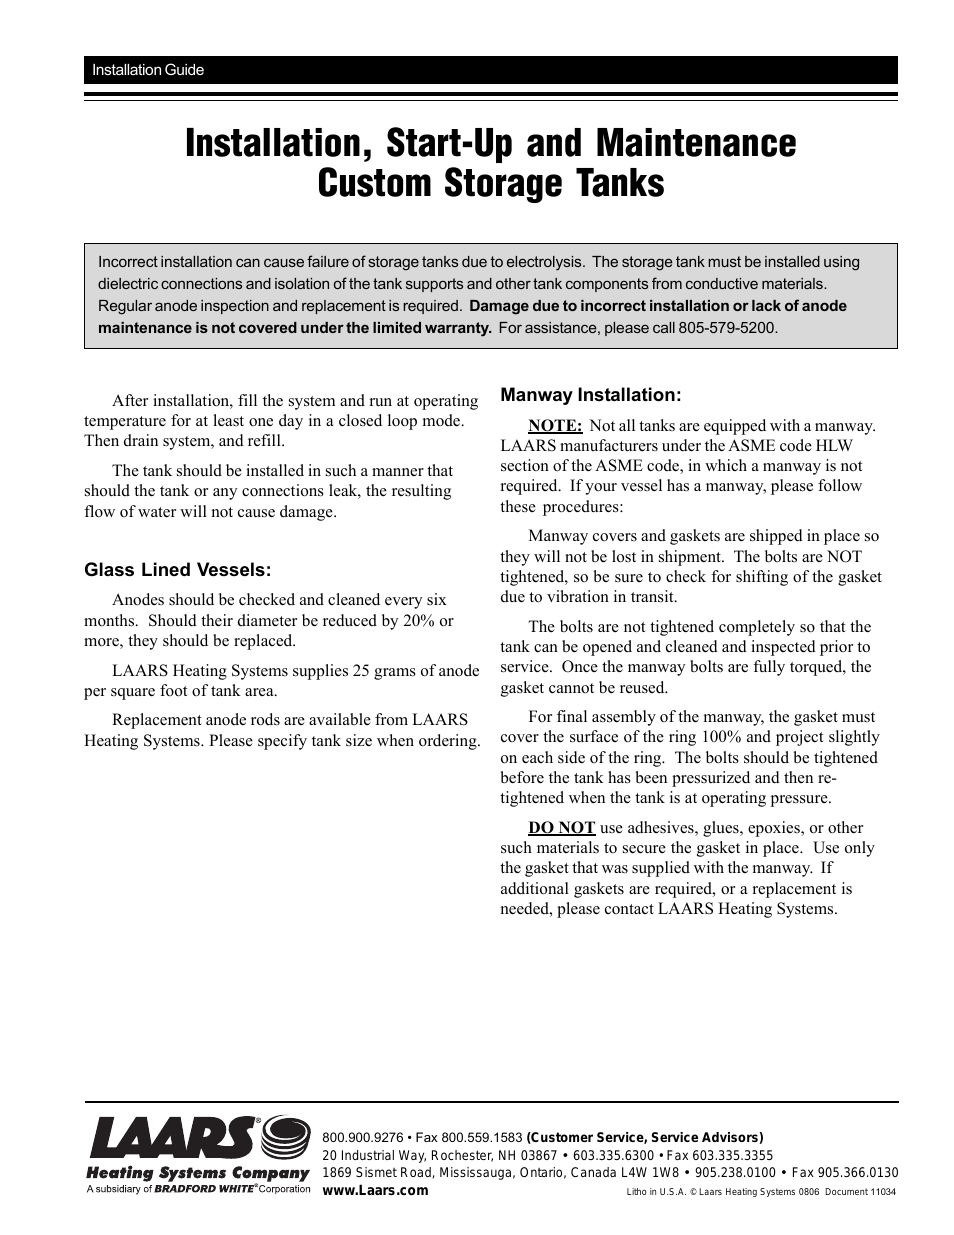 Custom ASME Storage Tanks - Installation Manual